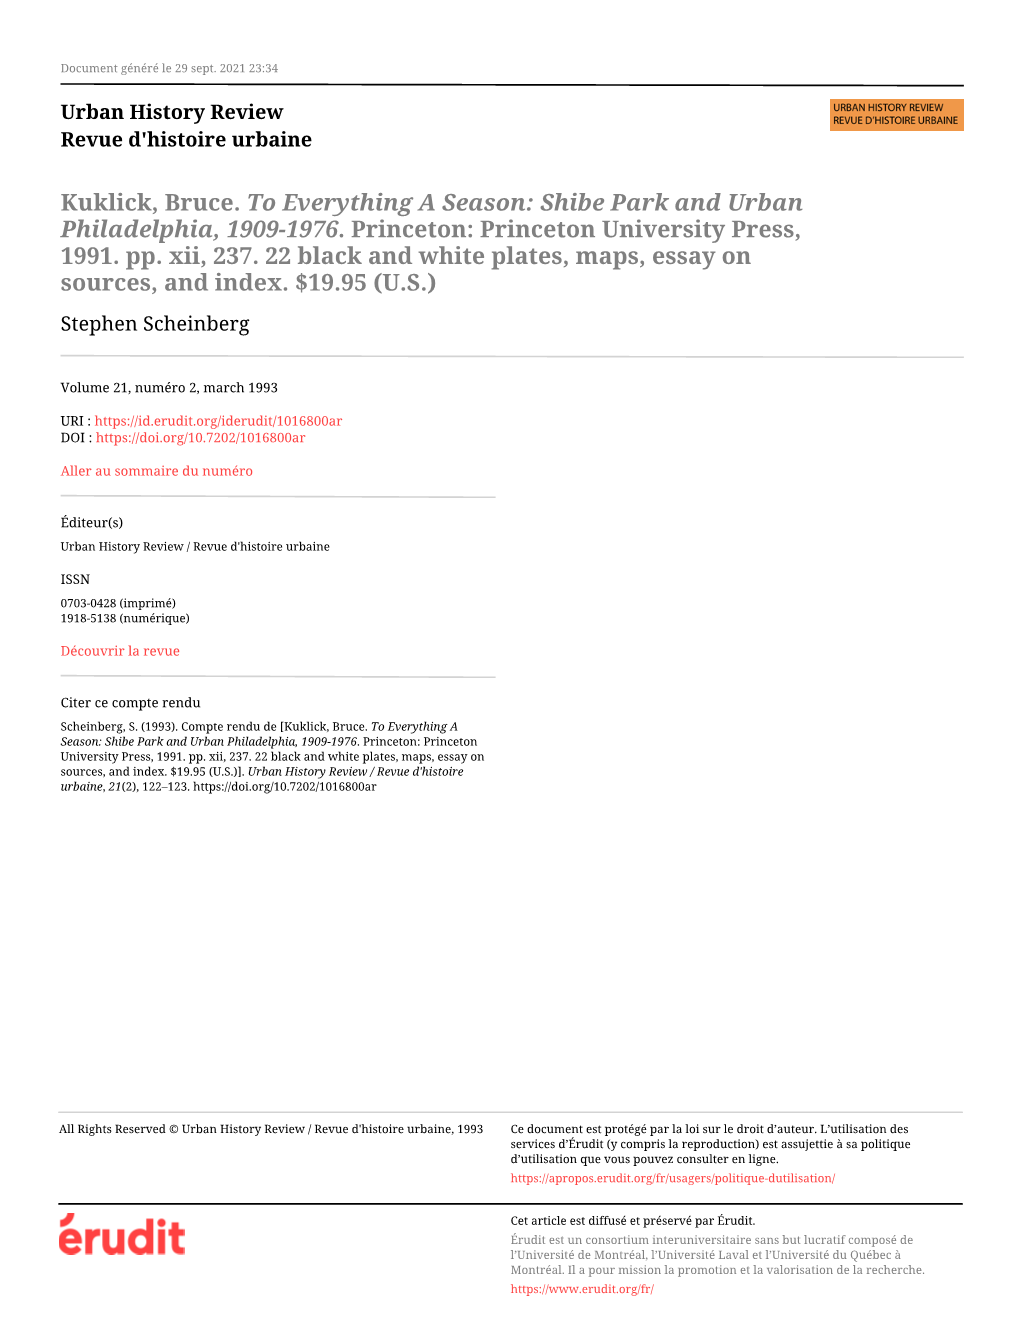 Kuklick, Bruce. to Everything a Season: Shibe Park and Urban Philadelphia, 1909-1976. Princeton: Princeton University Press, 1991